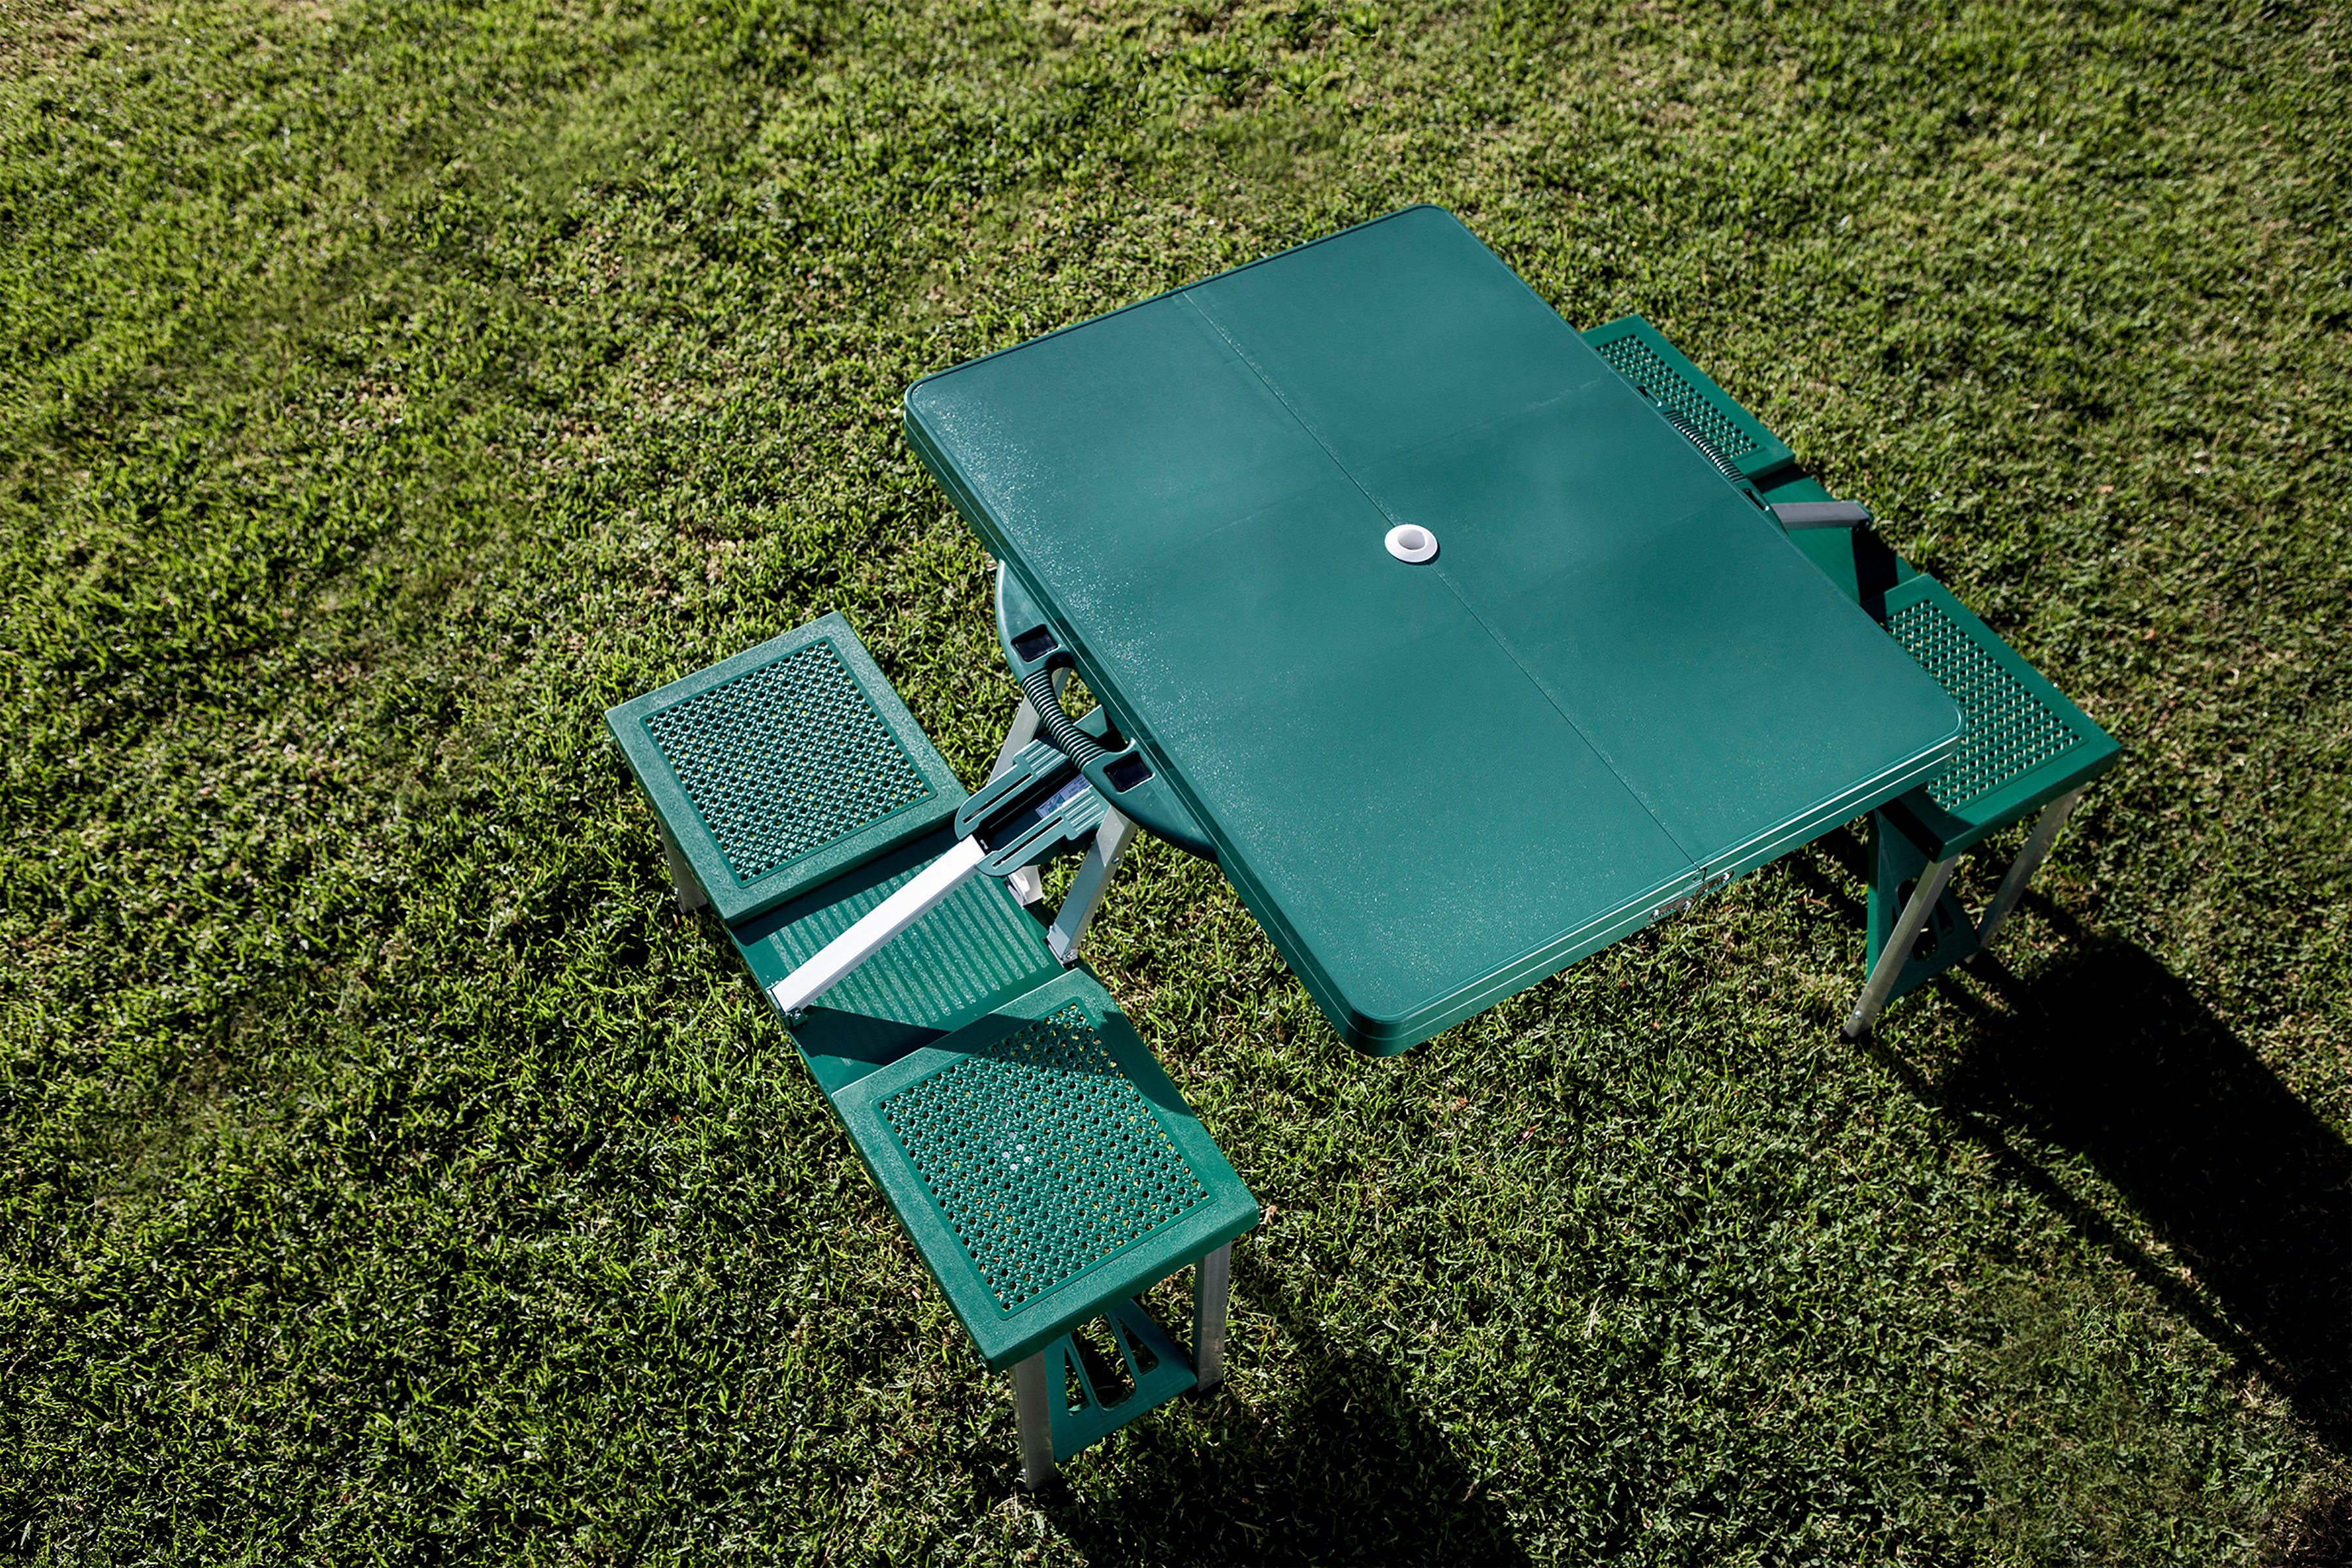 Oregon Ducks - Picnic Table Portable Folding Table with Seats